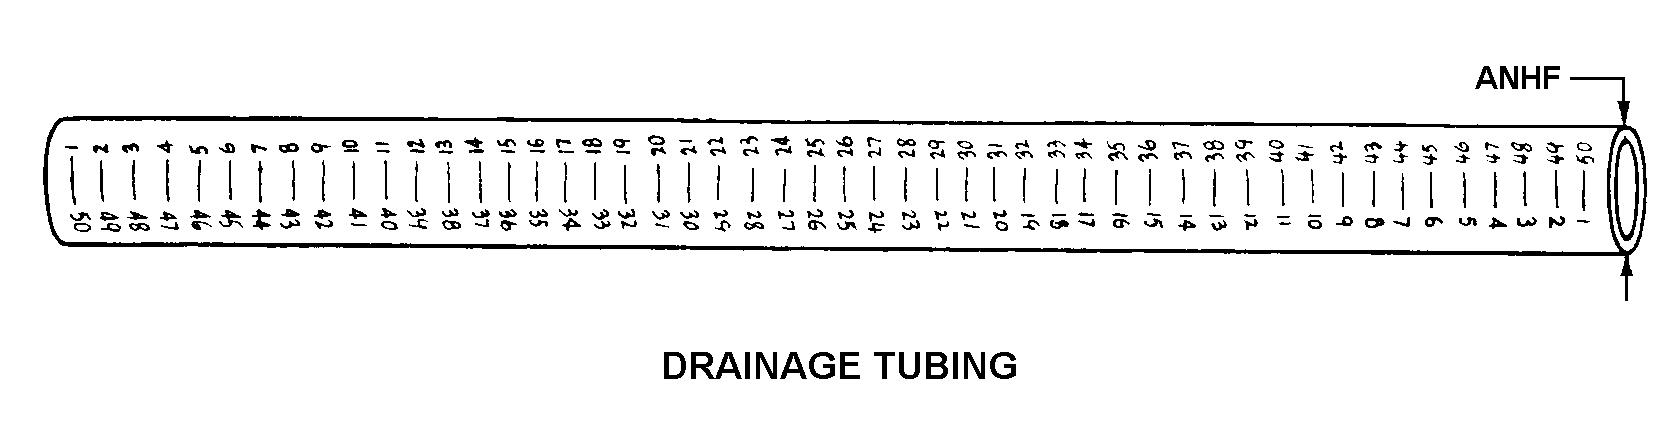 DRAINAGE TUBING style nsn 6515-01-444-3369